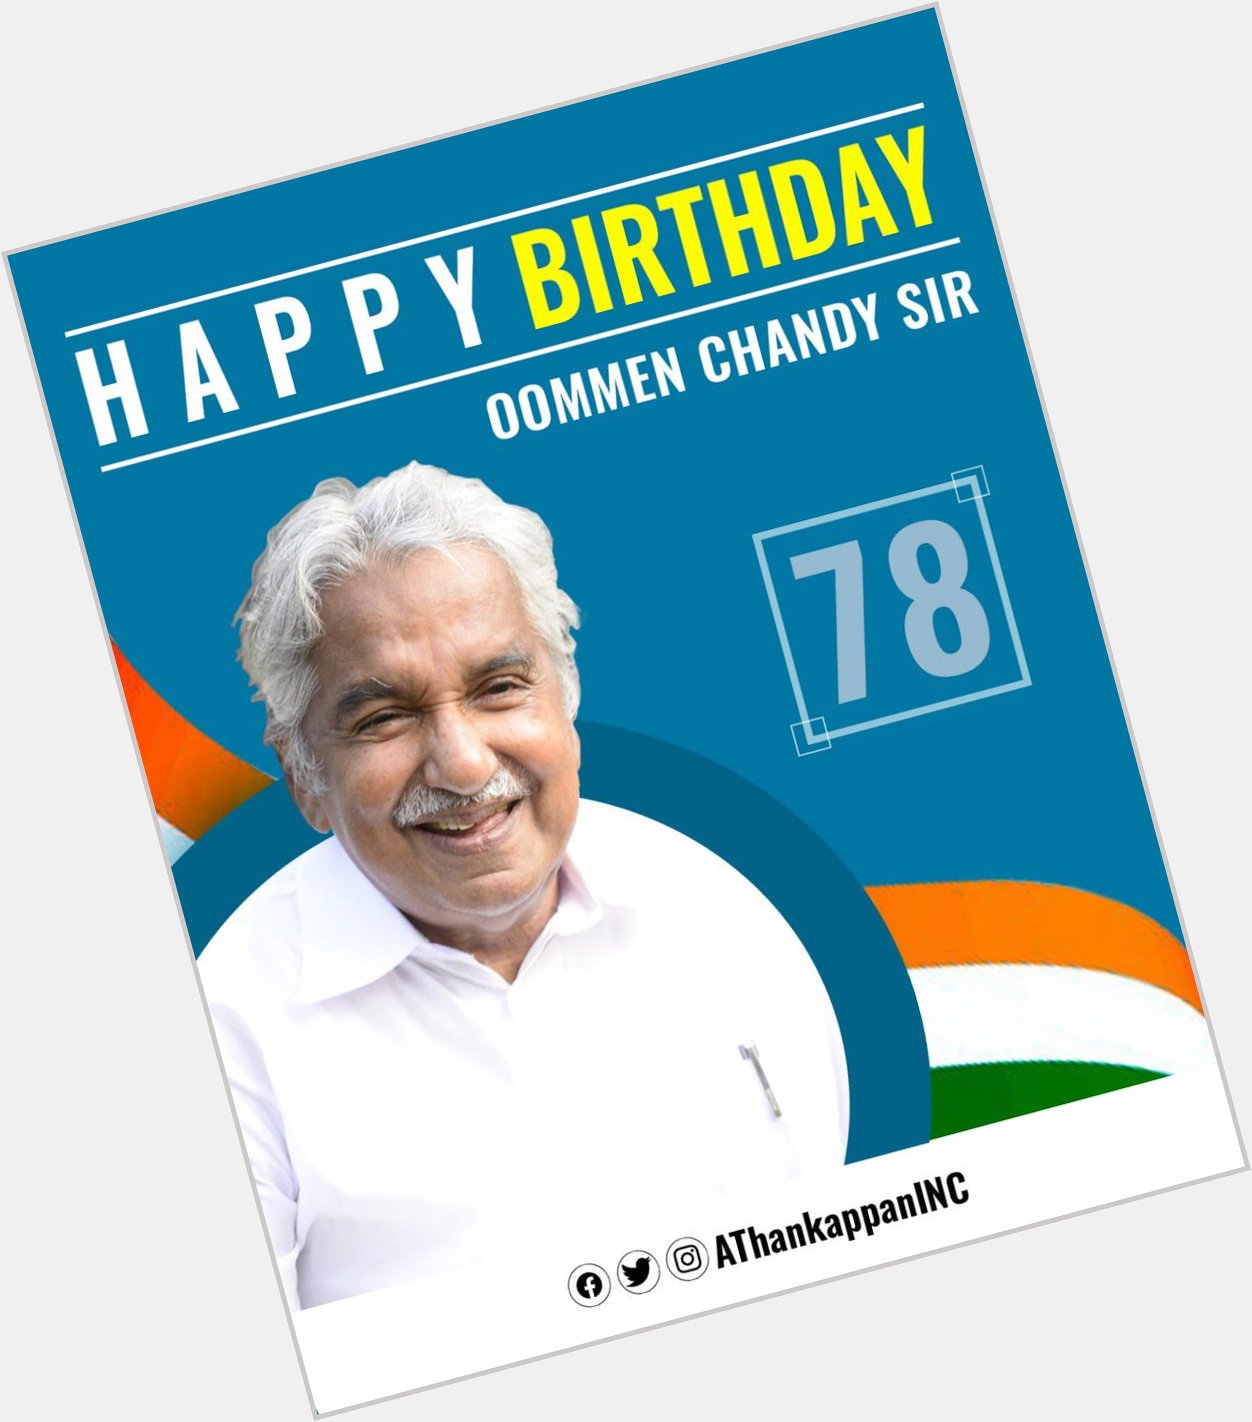 Happy Birthday Oommen Chandy Sir .
.   